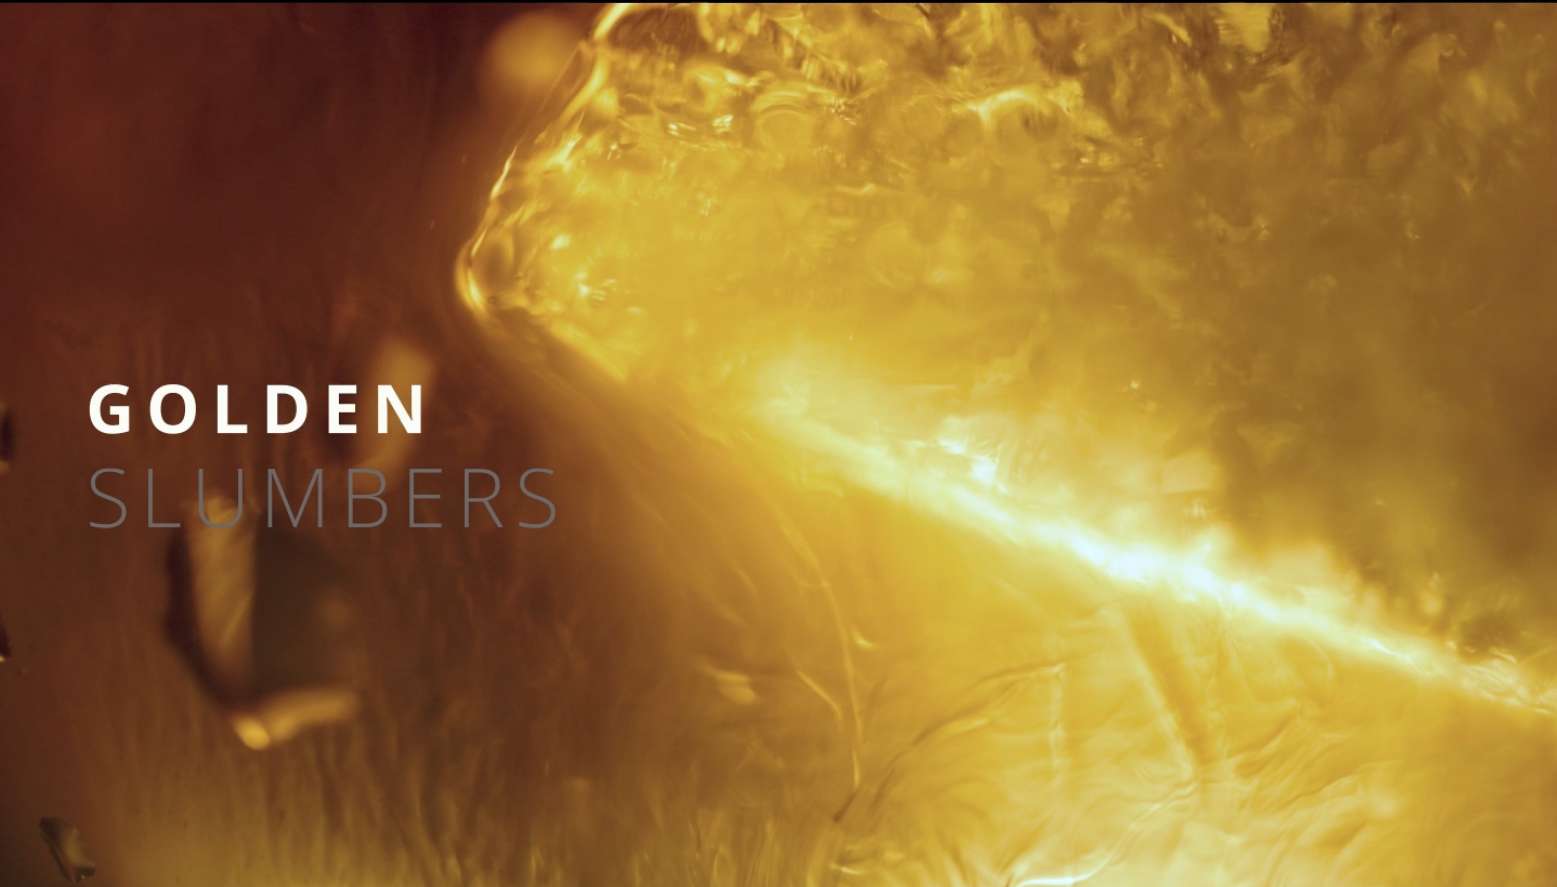 《Golden Slumbers》广告MV摄影课作业 器皿练习